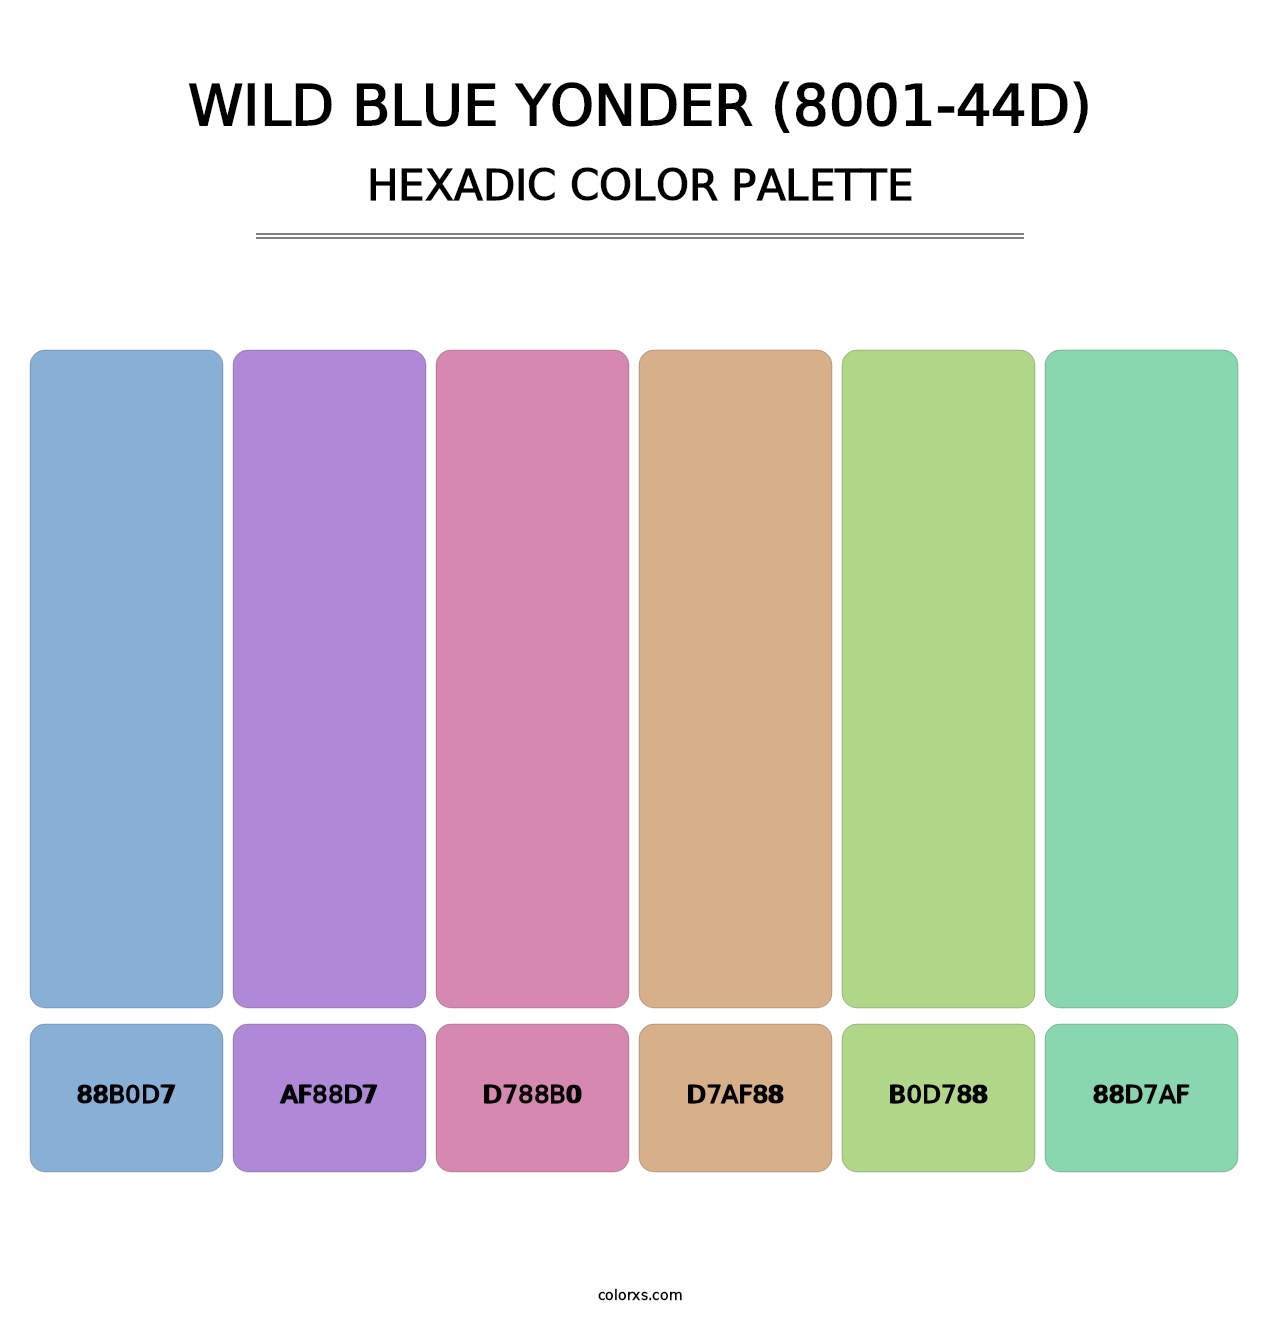 Wild Blue Yonder (8001-44D) - Hexadic Color Palette